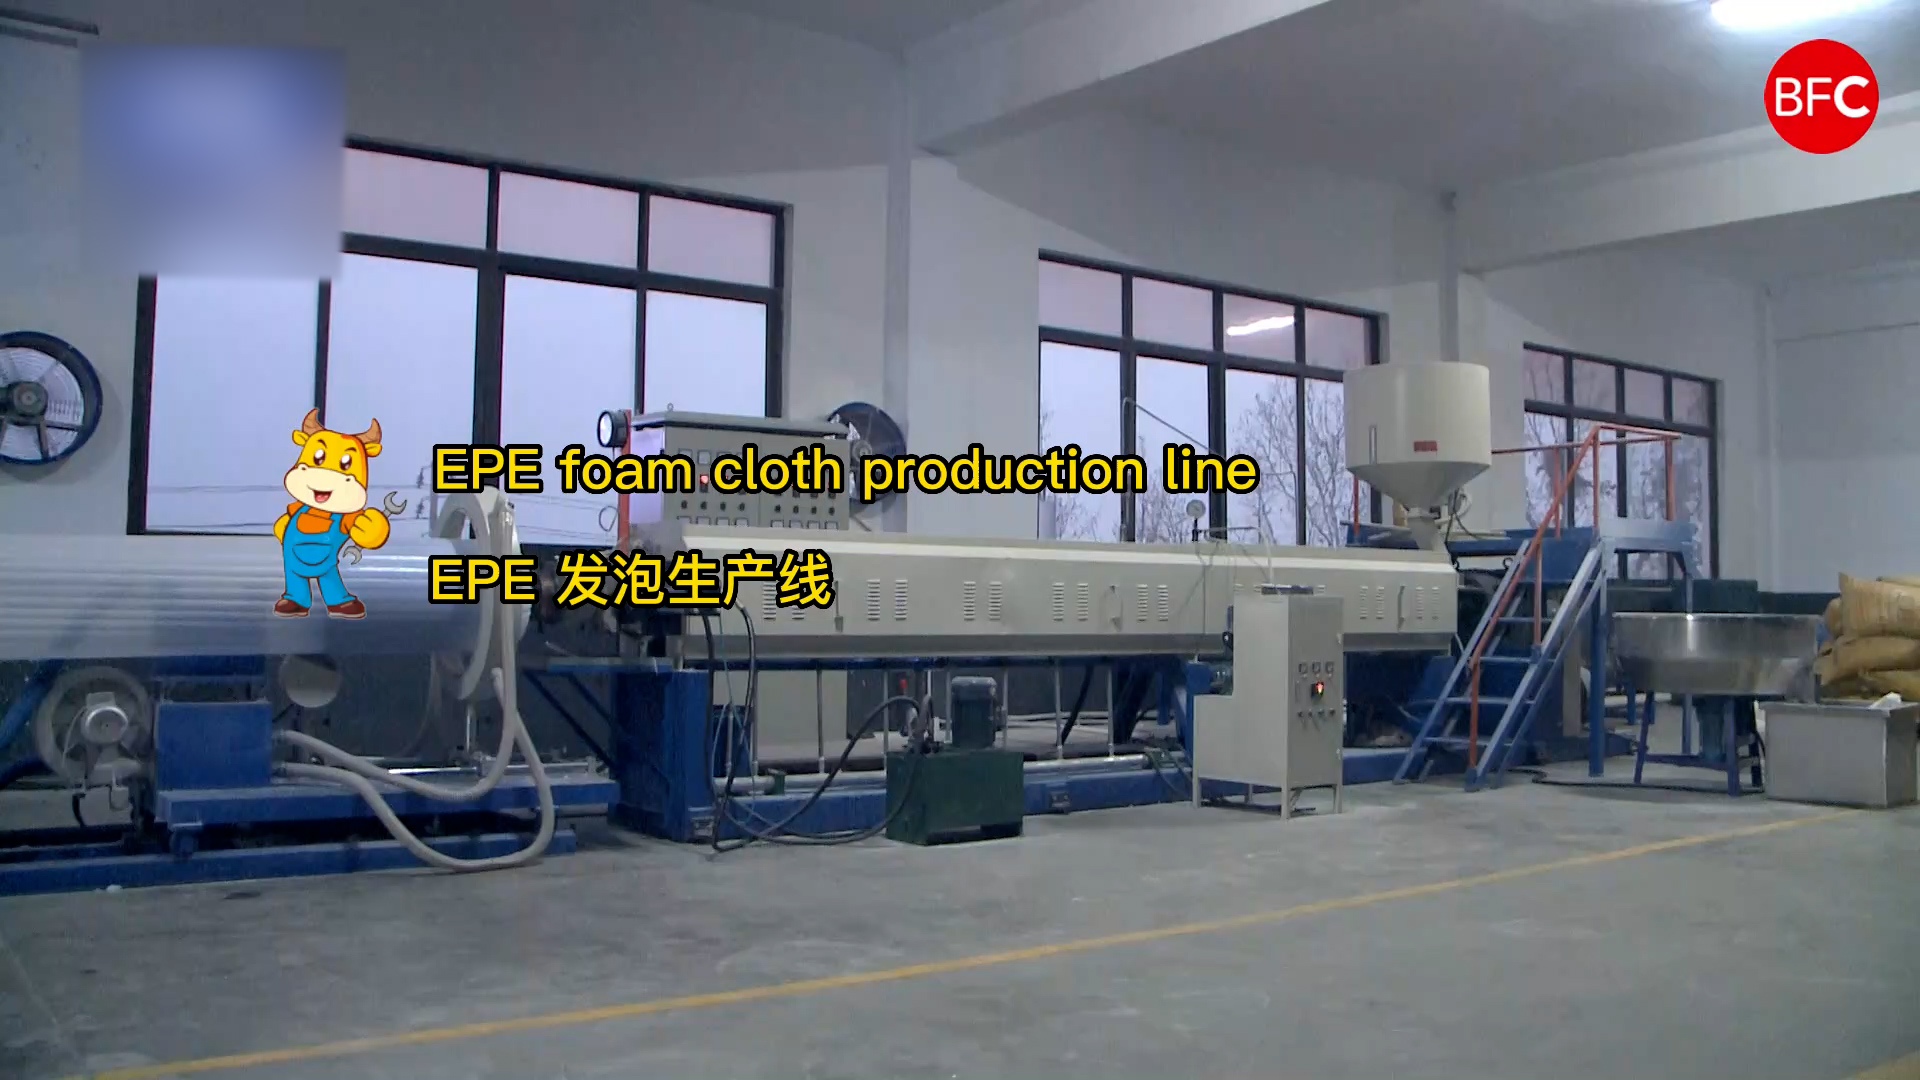 EPE foam cloth production line